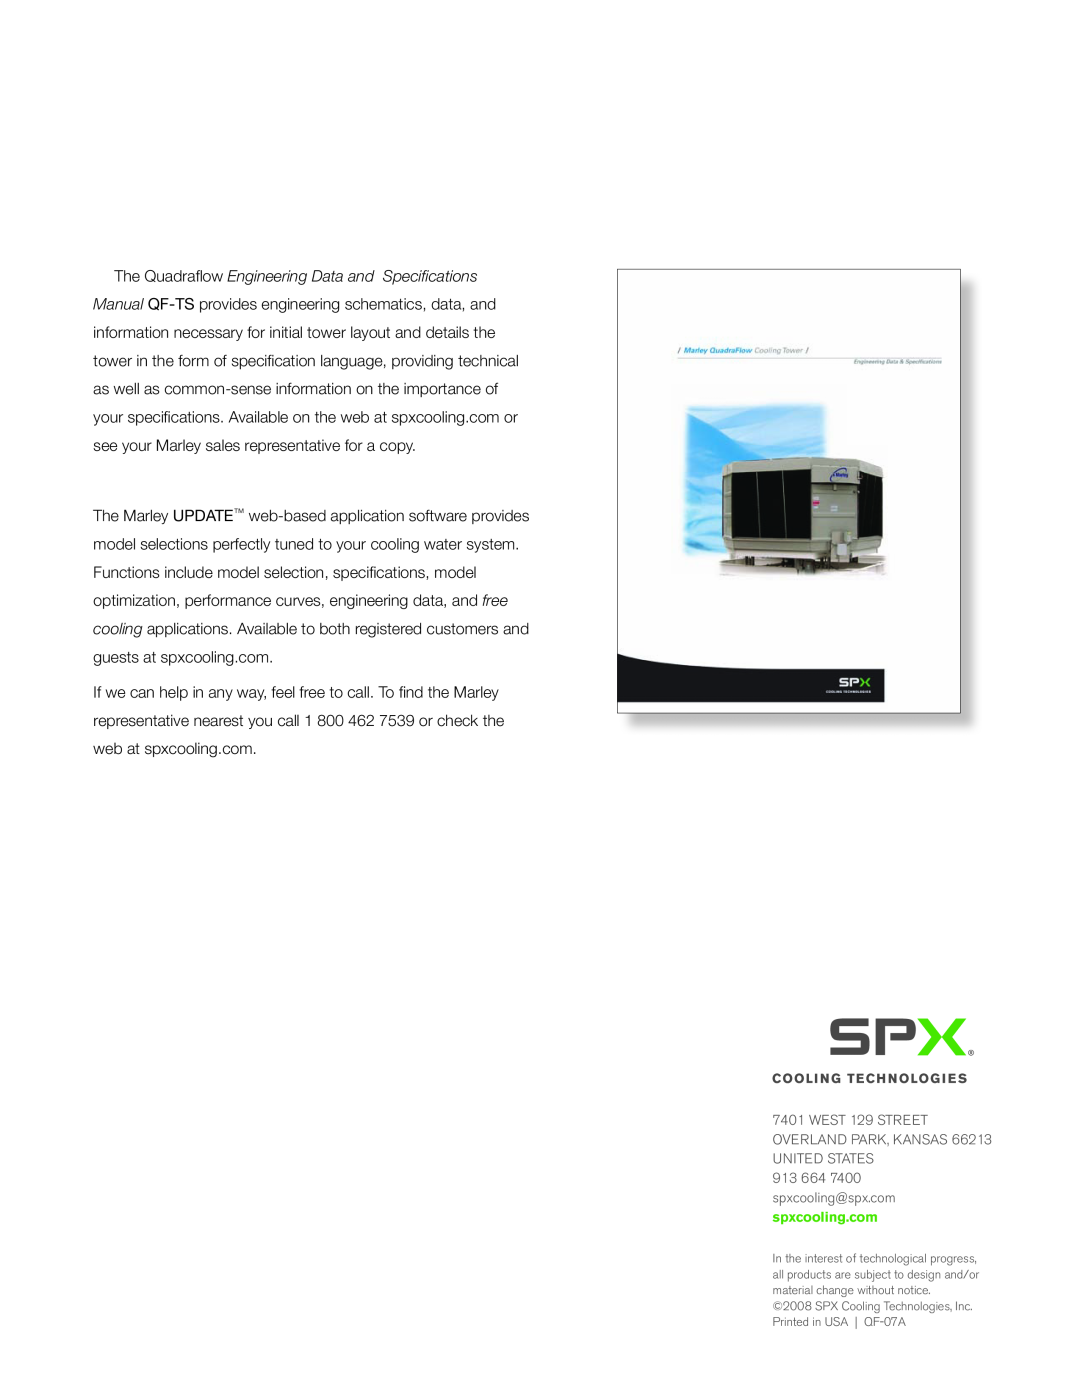 SPX Cooling Technologies Marley QuadraFlow manual 